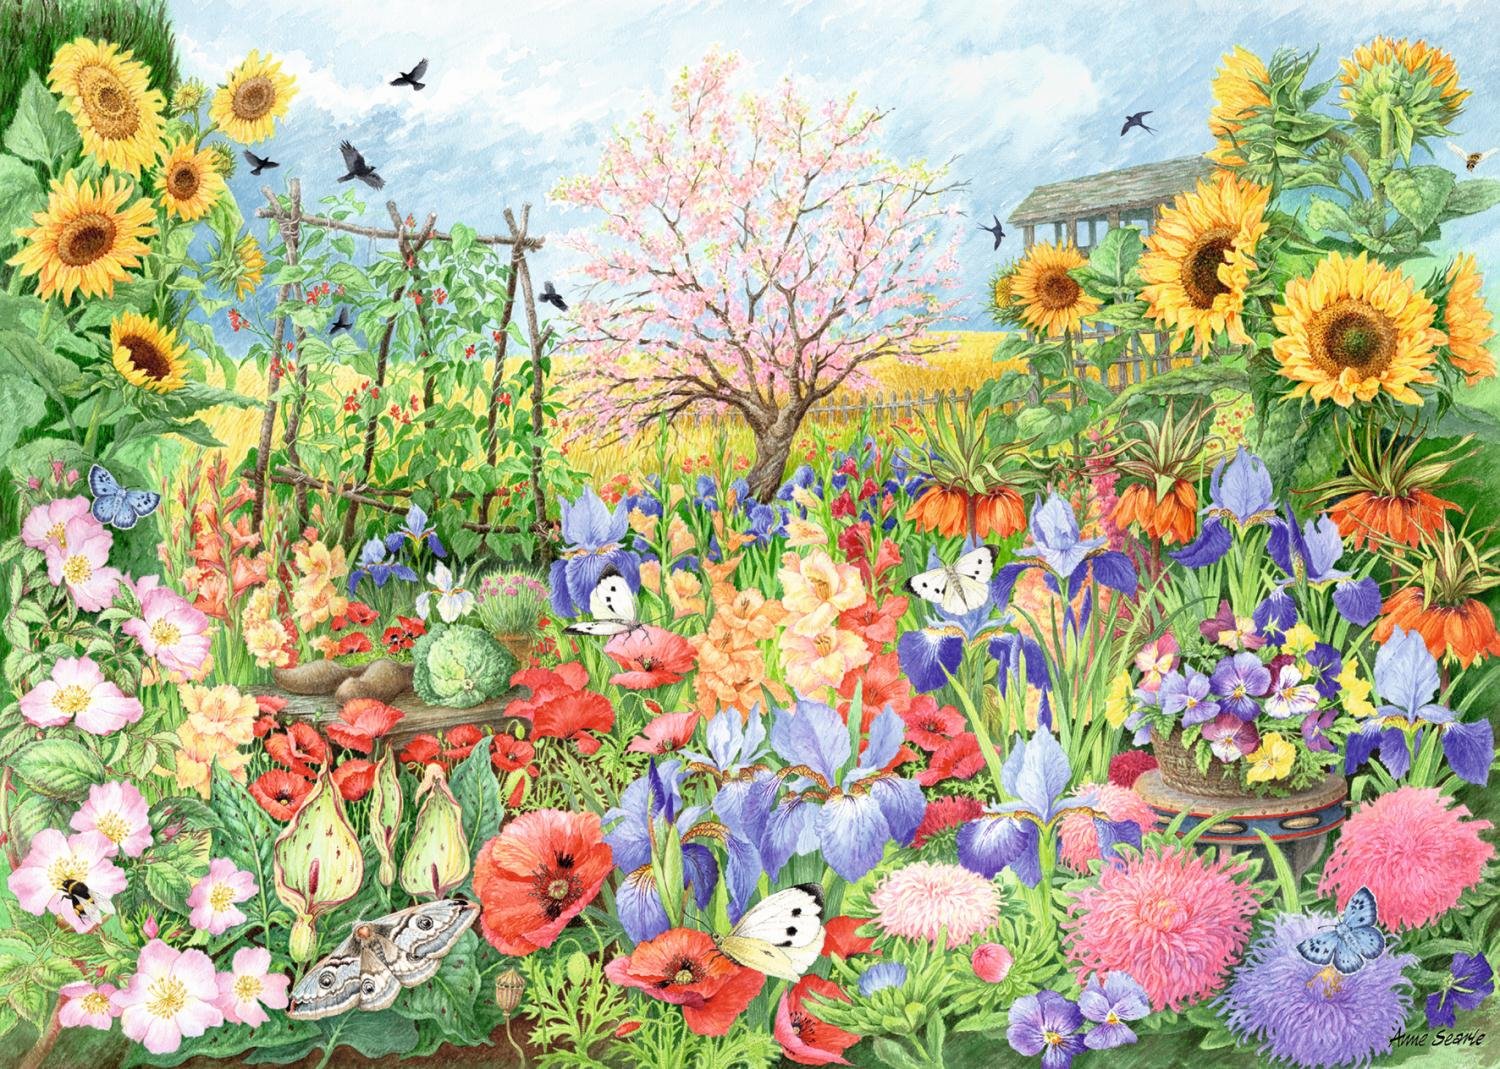 The Sunflower Garden